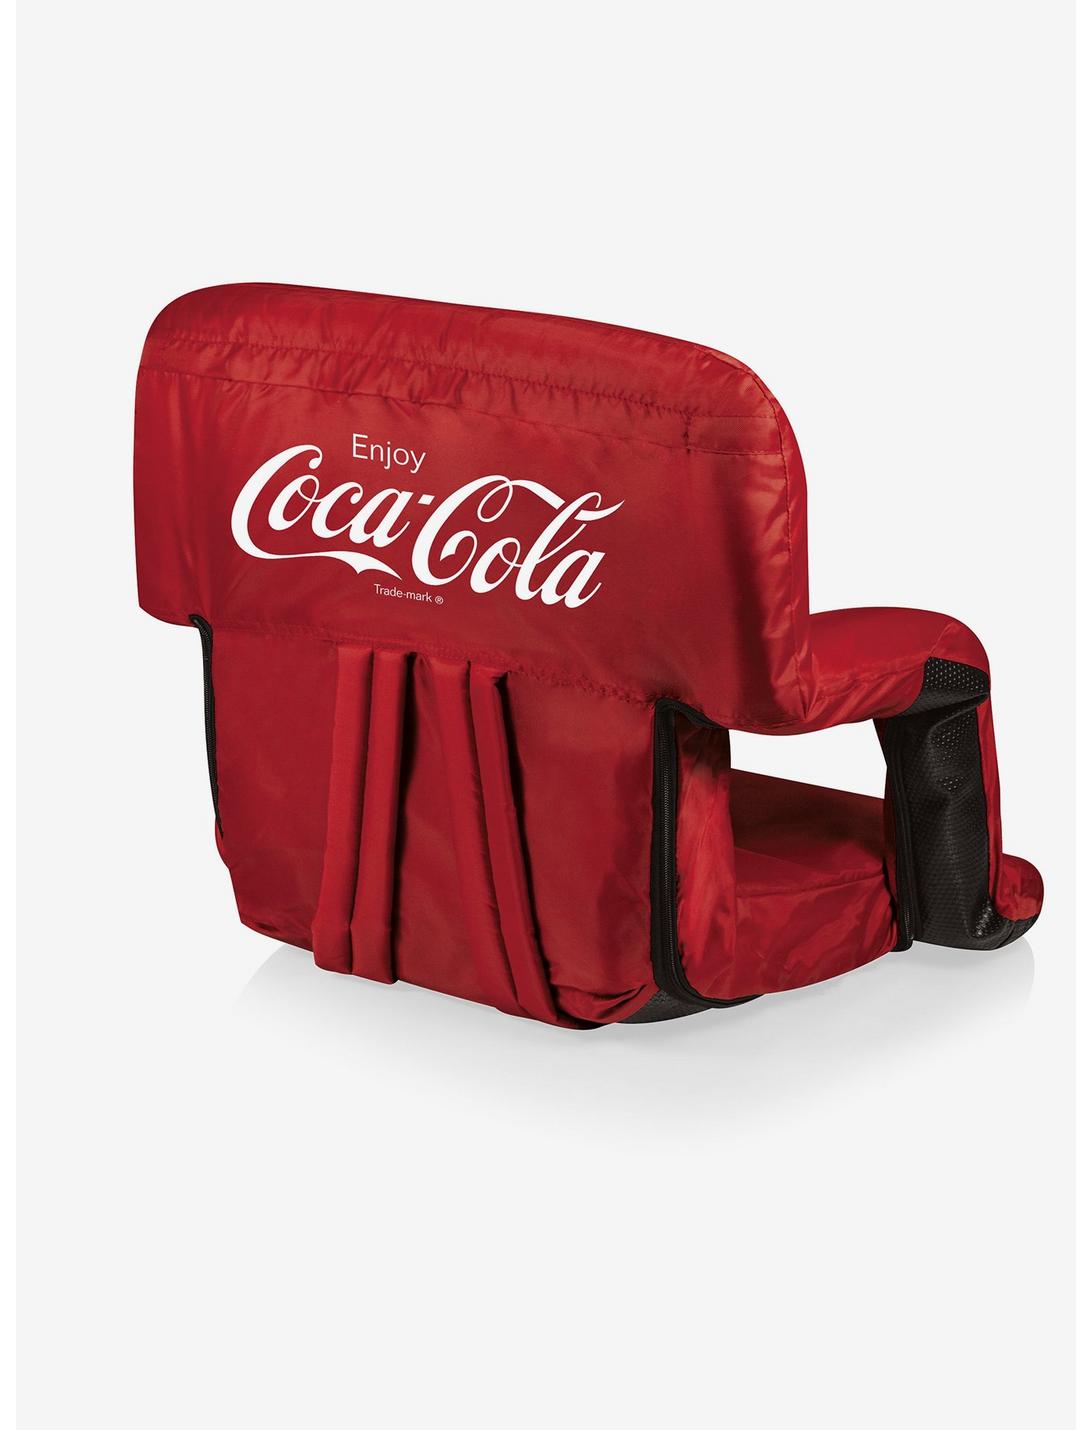 Coke Coca-Cola Enjoy Coca-Cola Ventura Seat, , hi-res